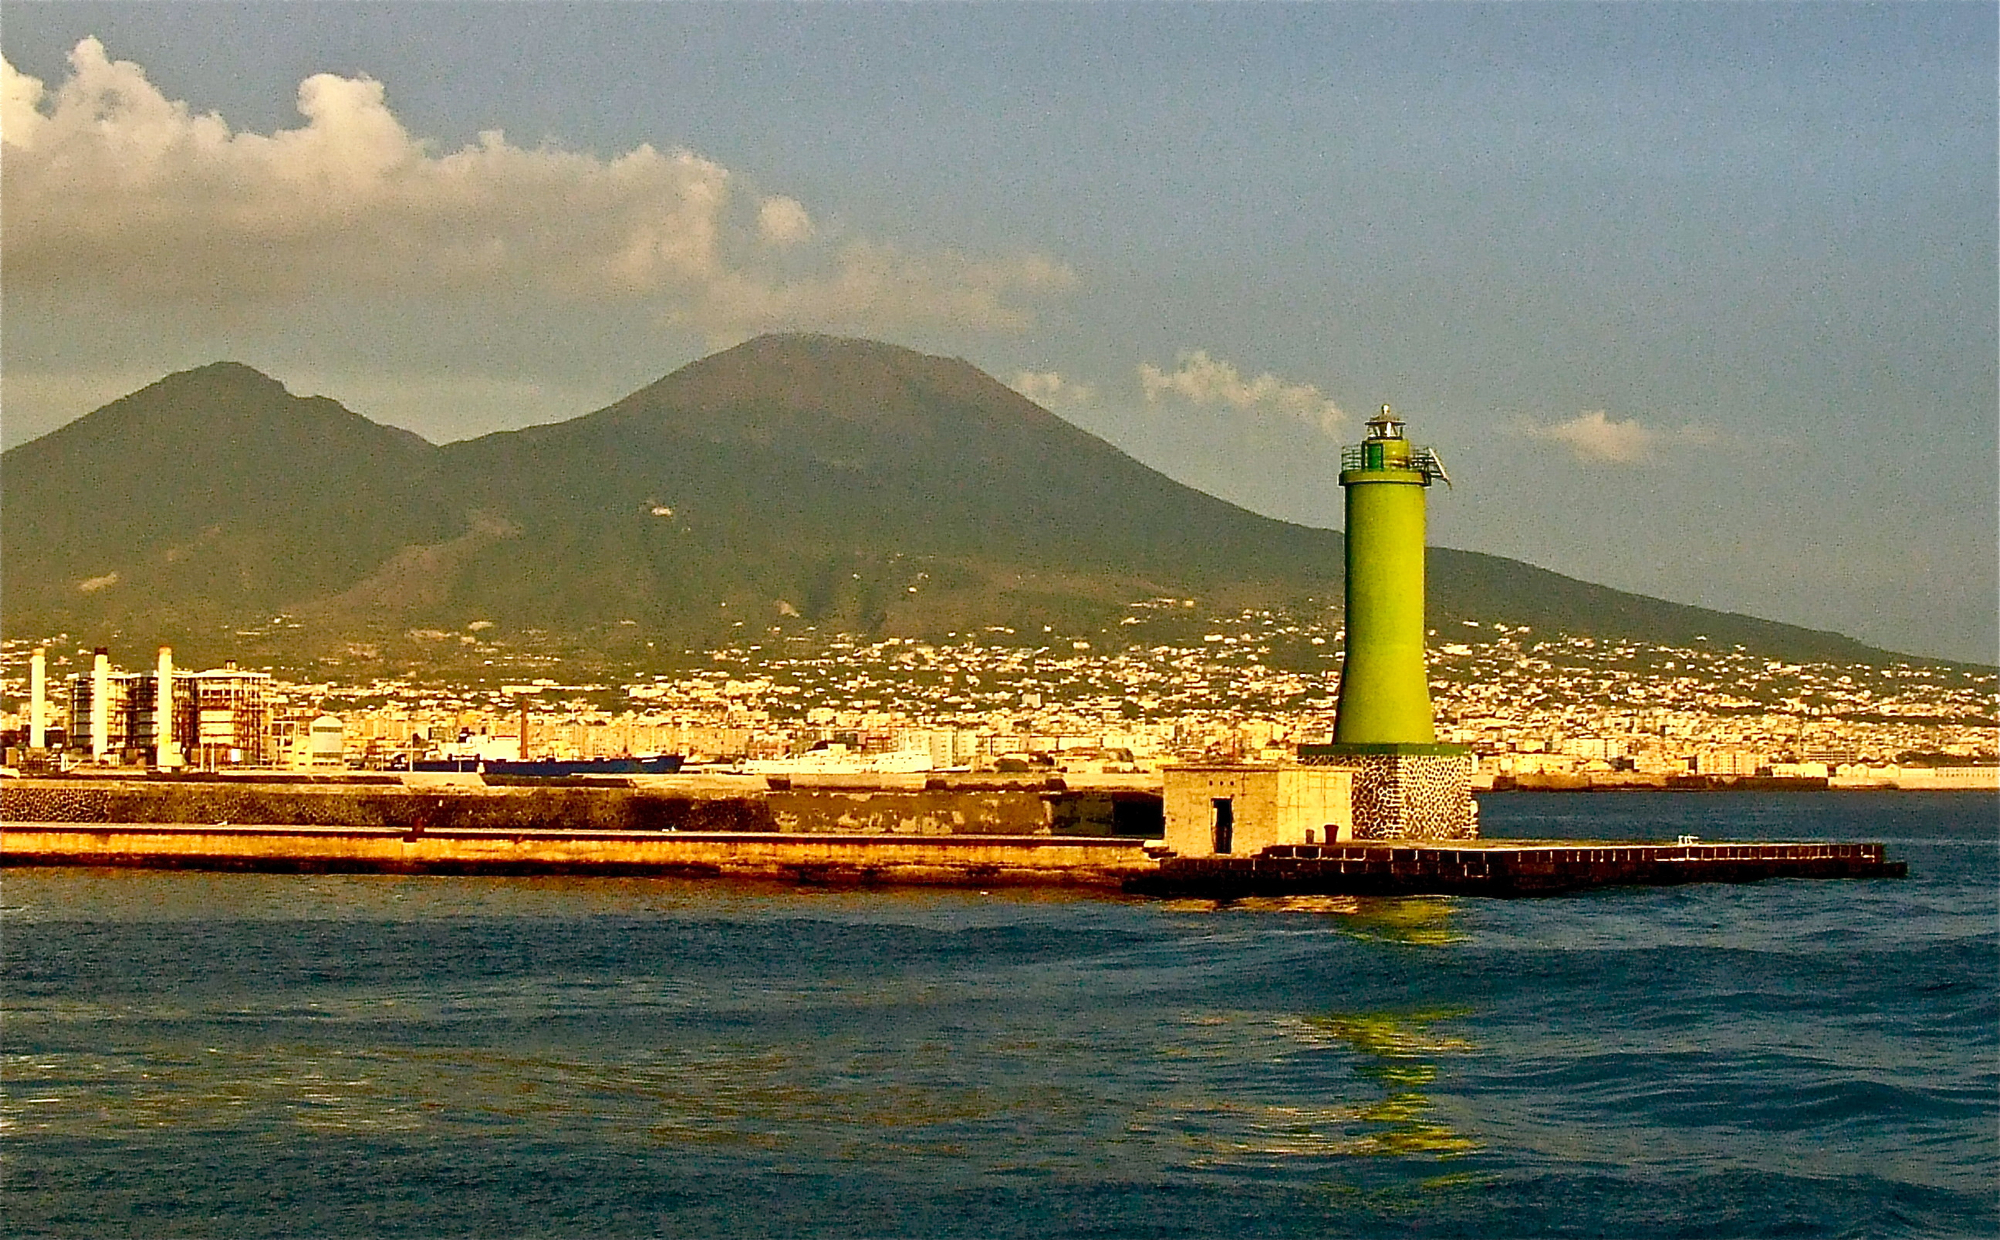 Ever-Present Mount Vesuvius